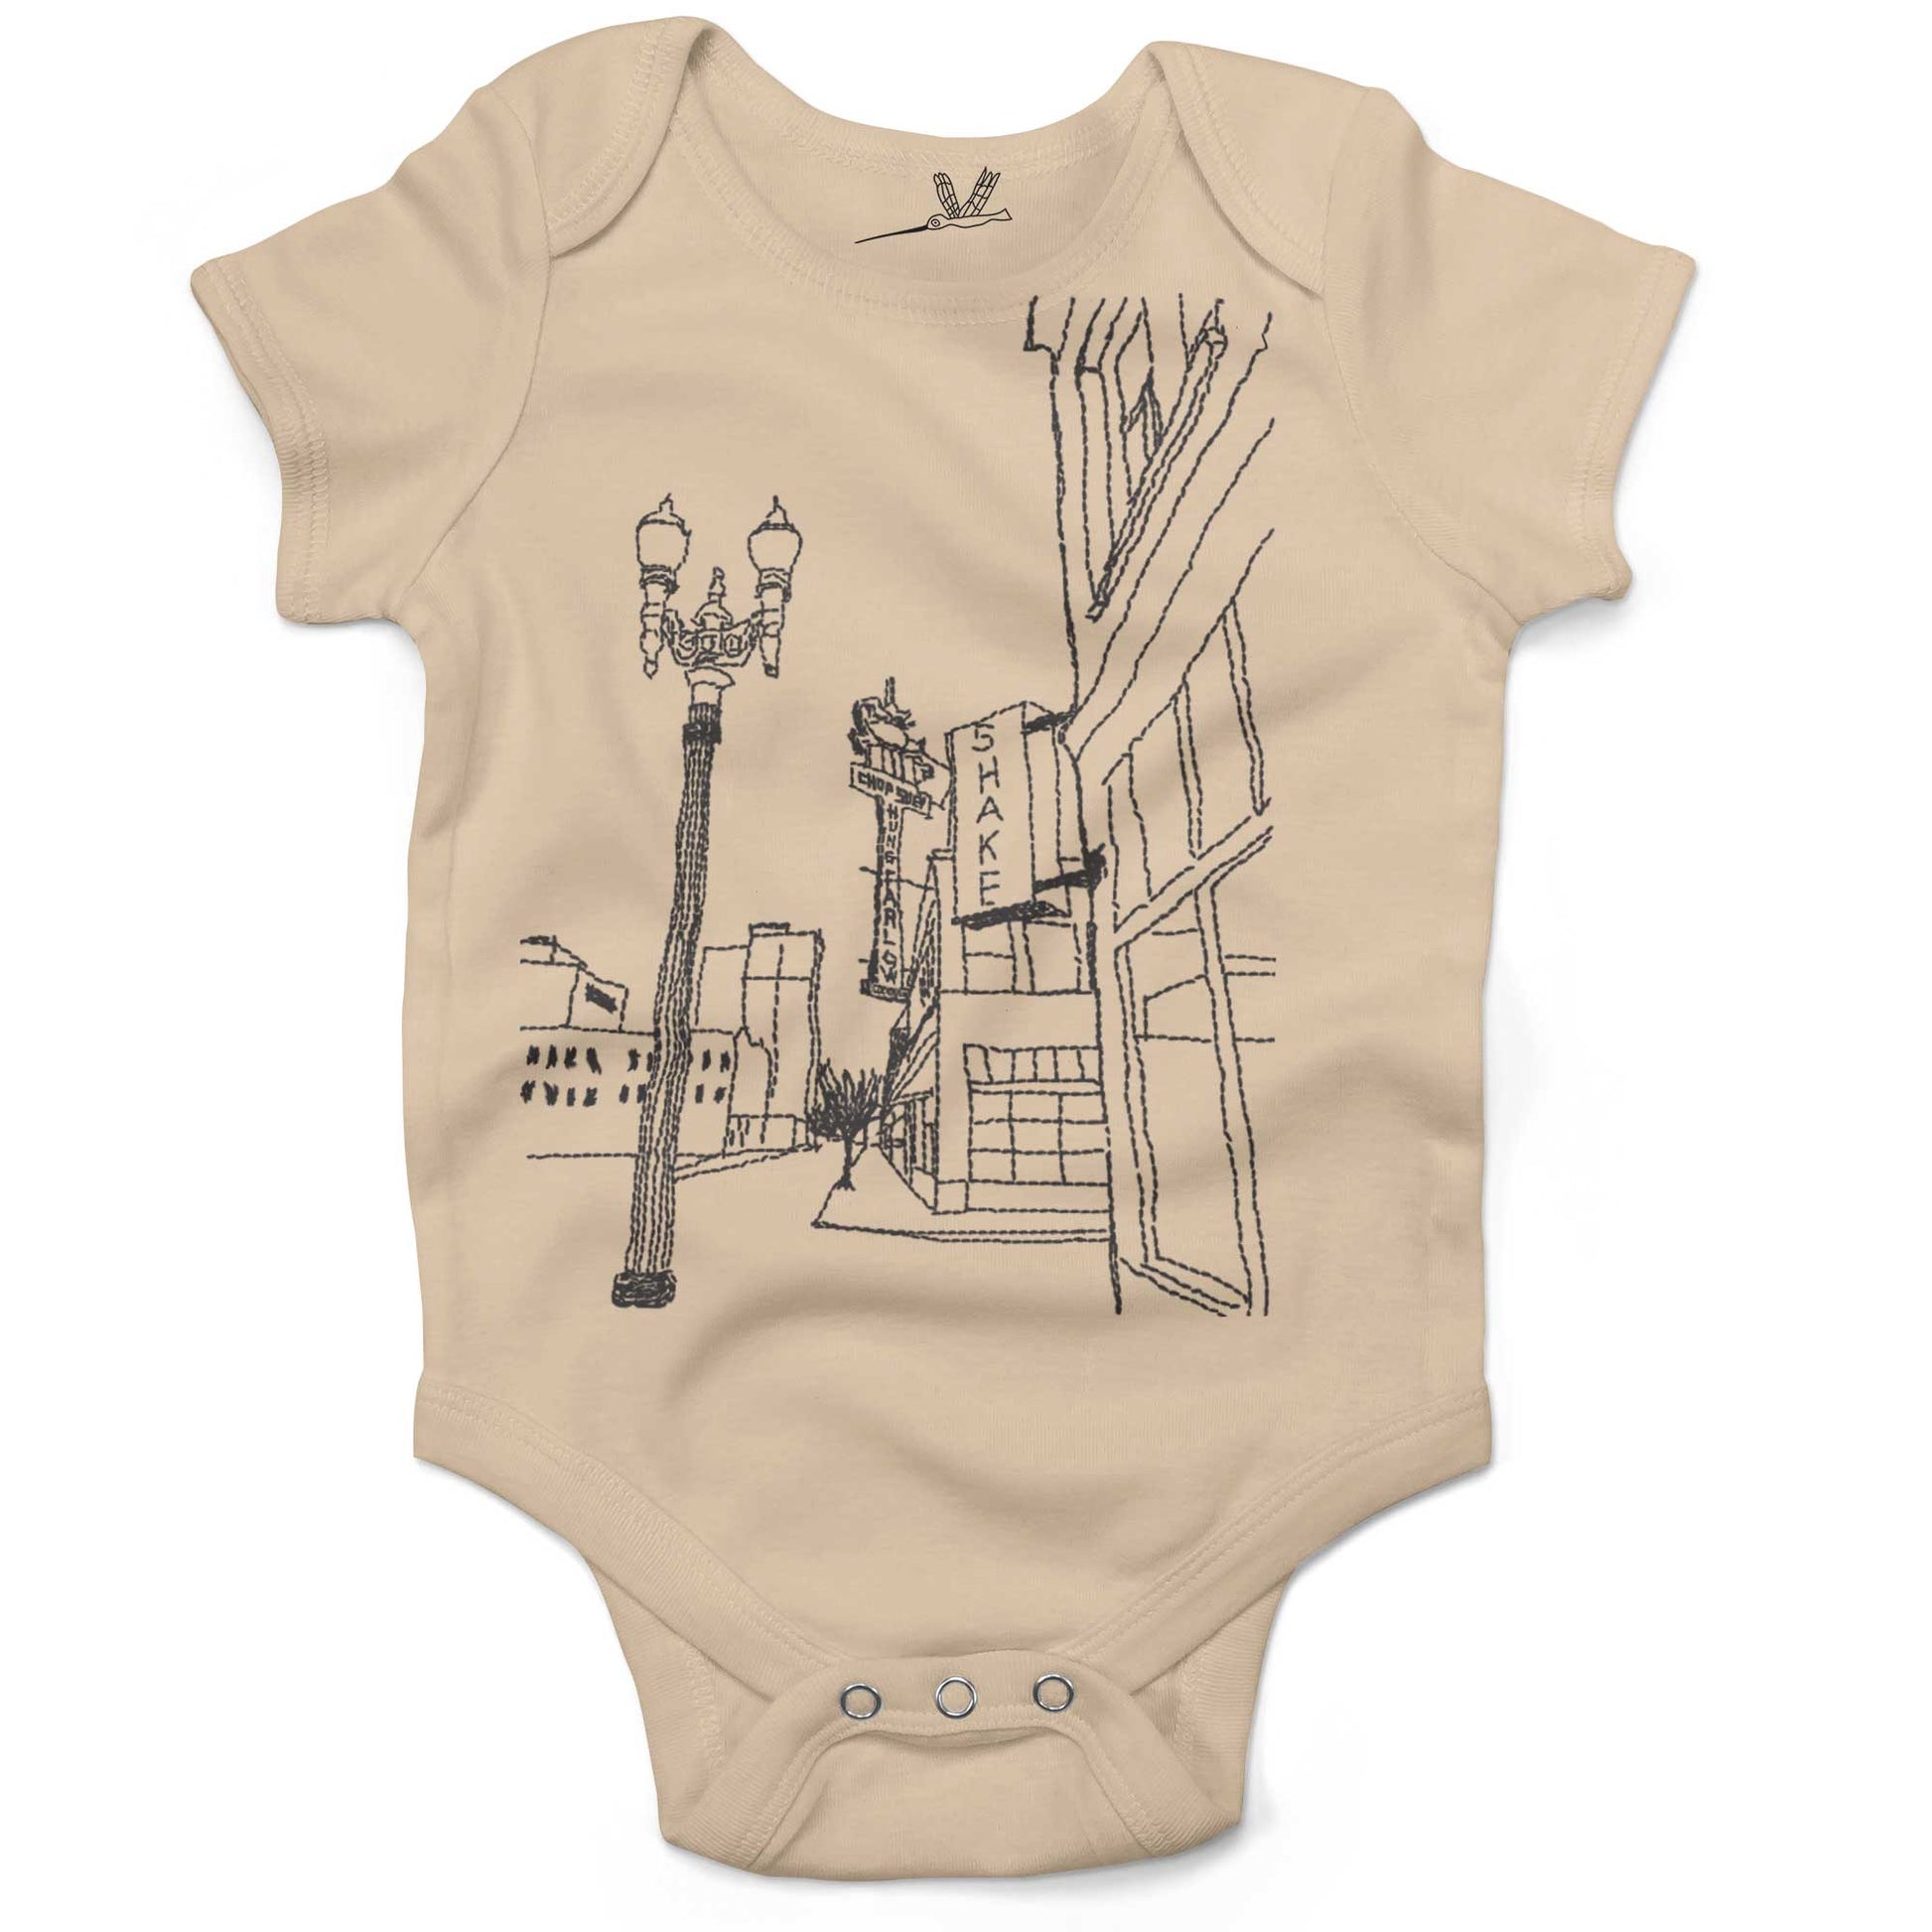 Hung Far Low Restaurant Infant Bodysuit-Organic Natural-3-6 months